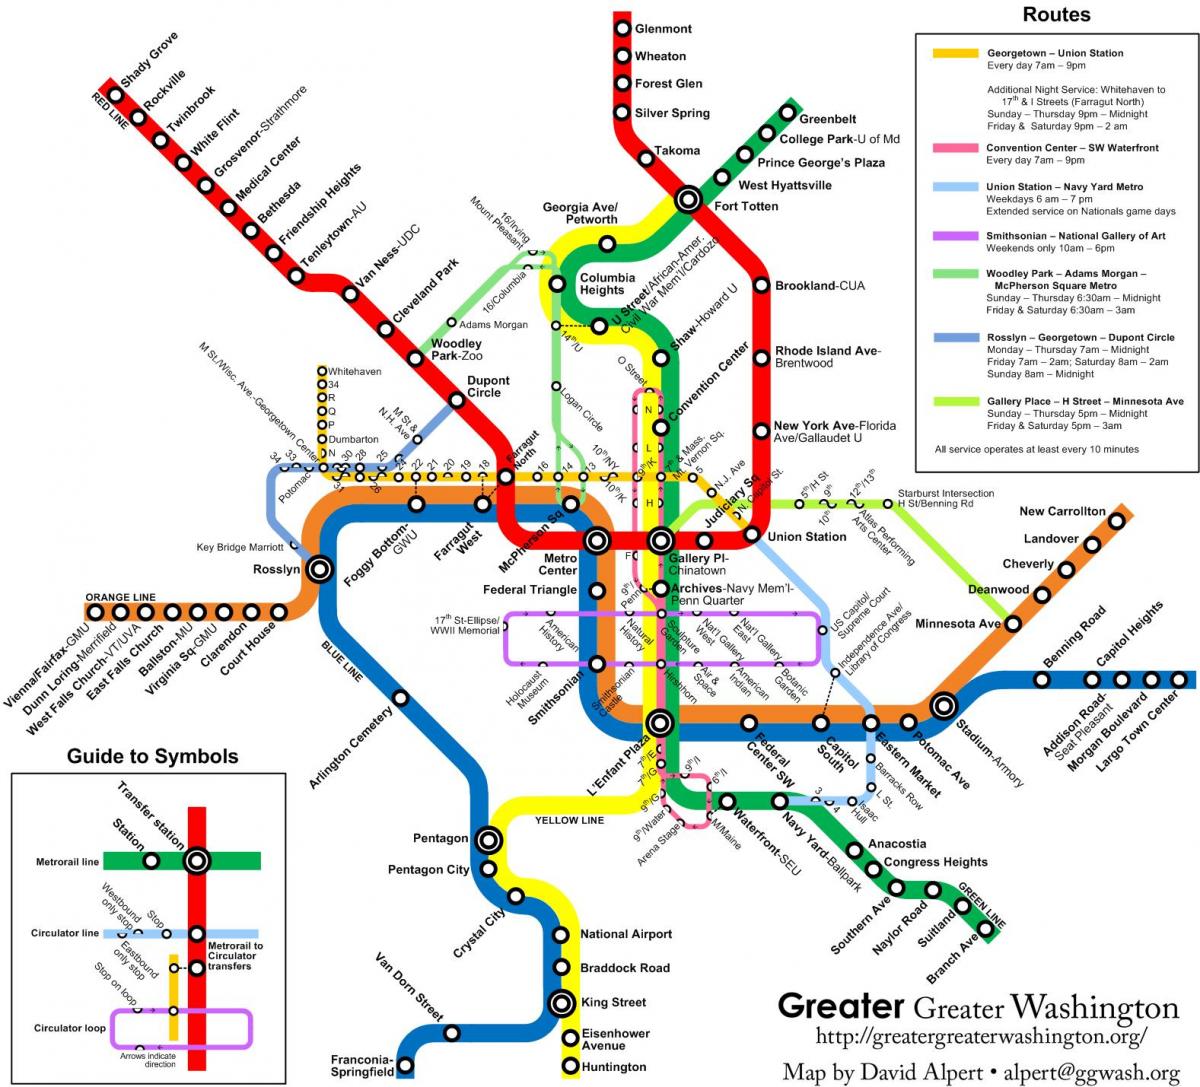 वाशिंगटन मेट्रो बस के नक्शे